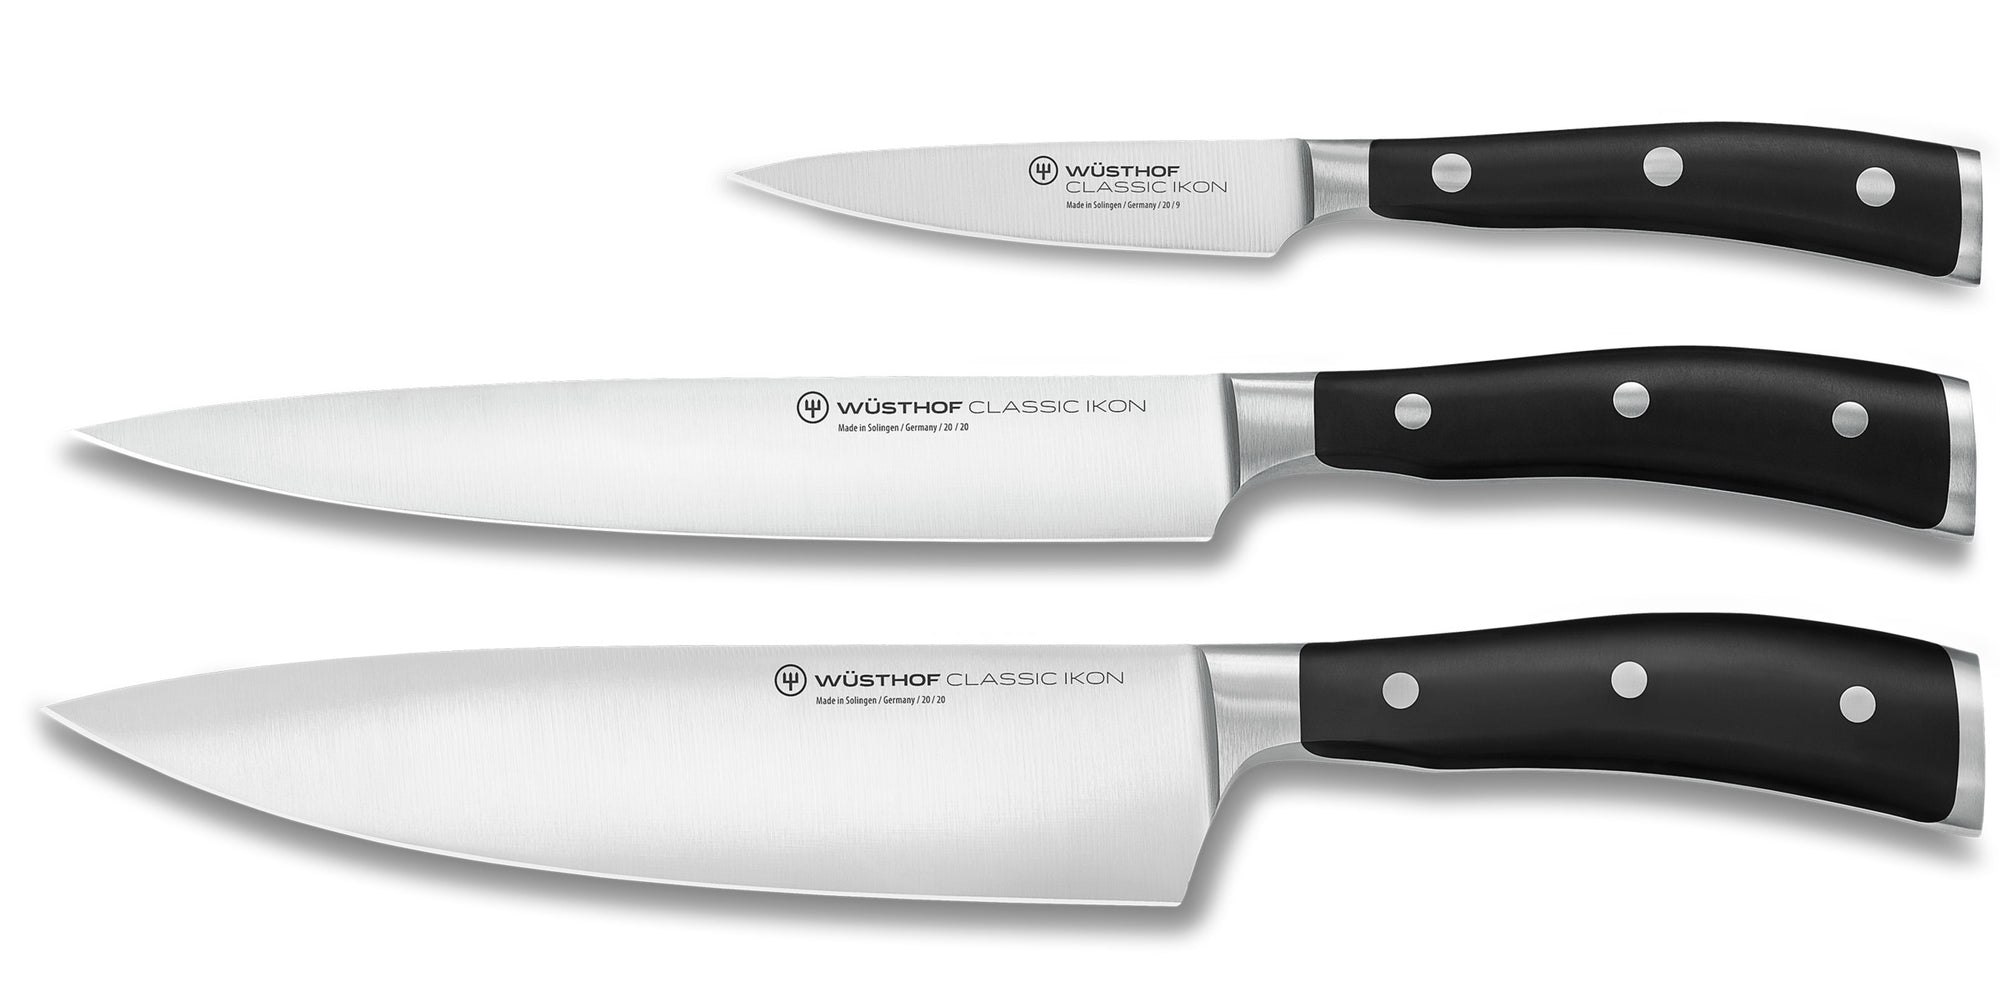 Wusthof Classic IKON 3 piece knife set 9601 Canada